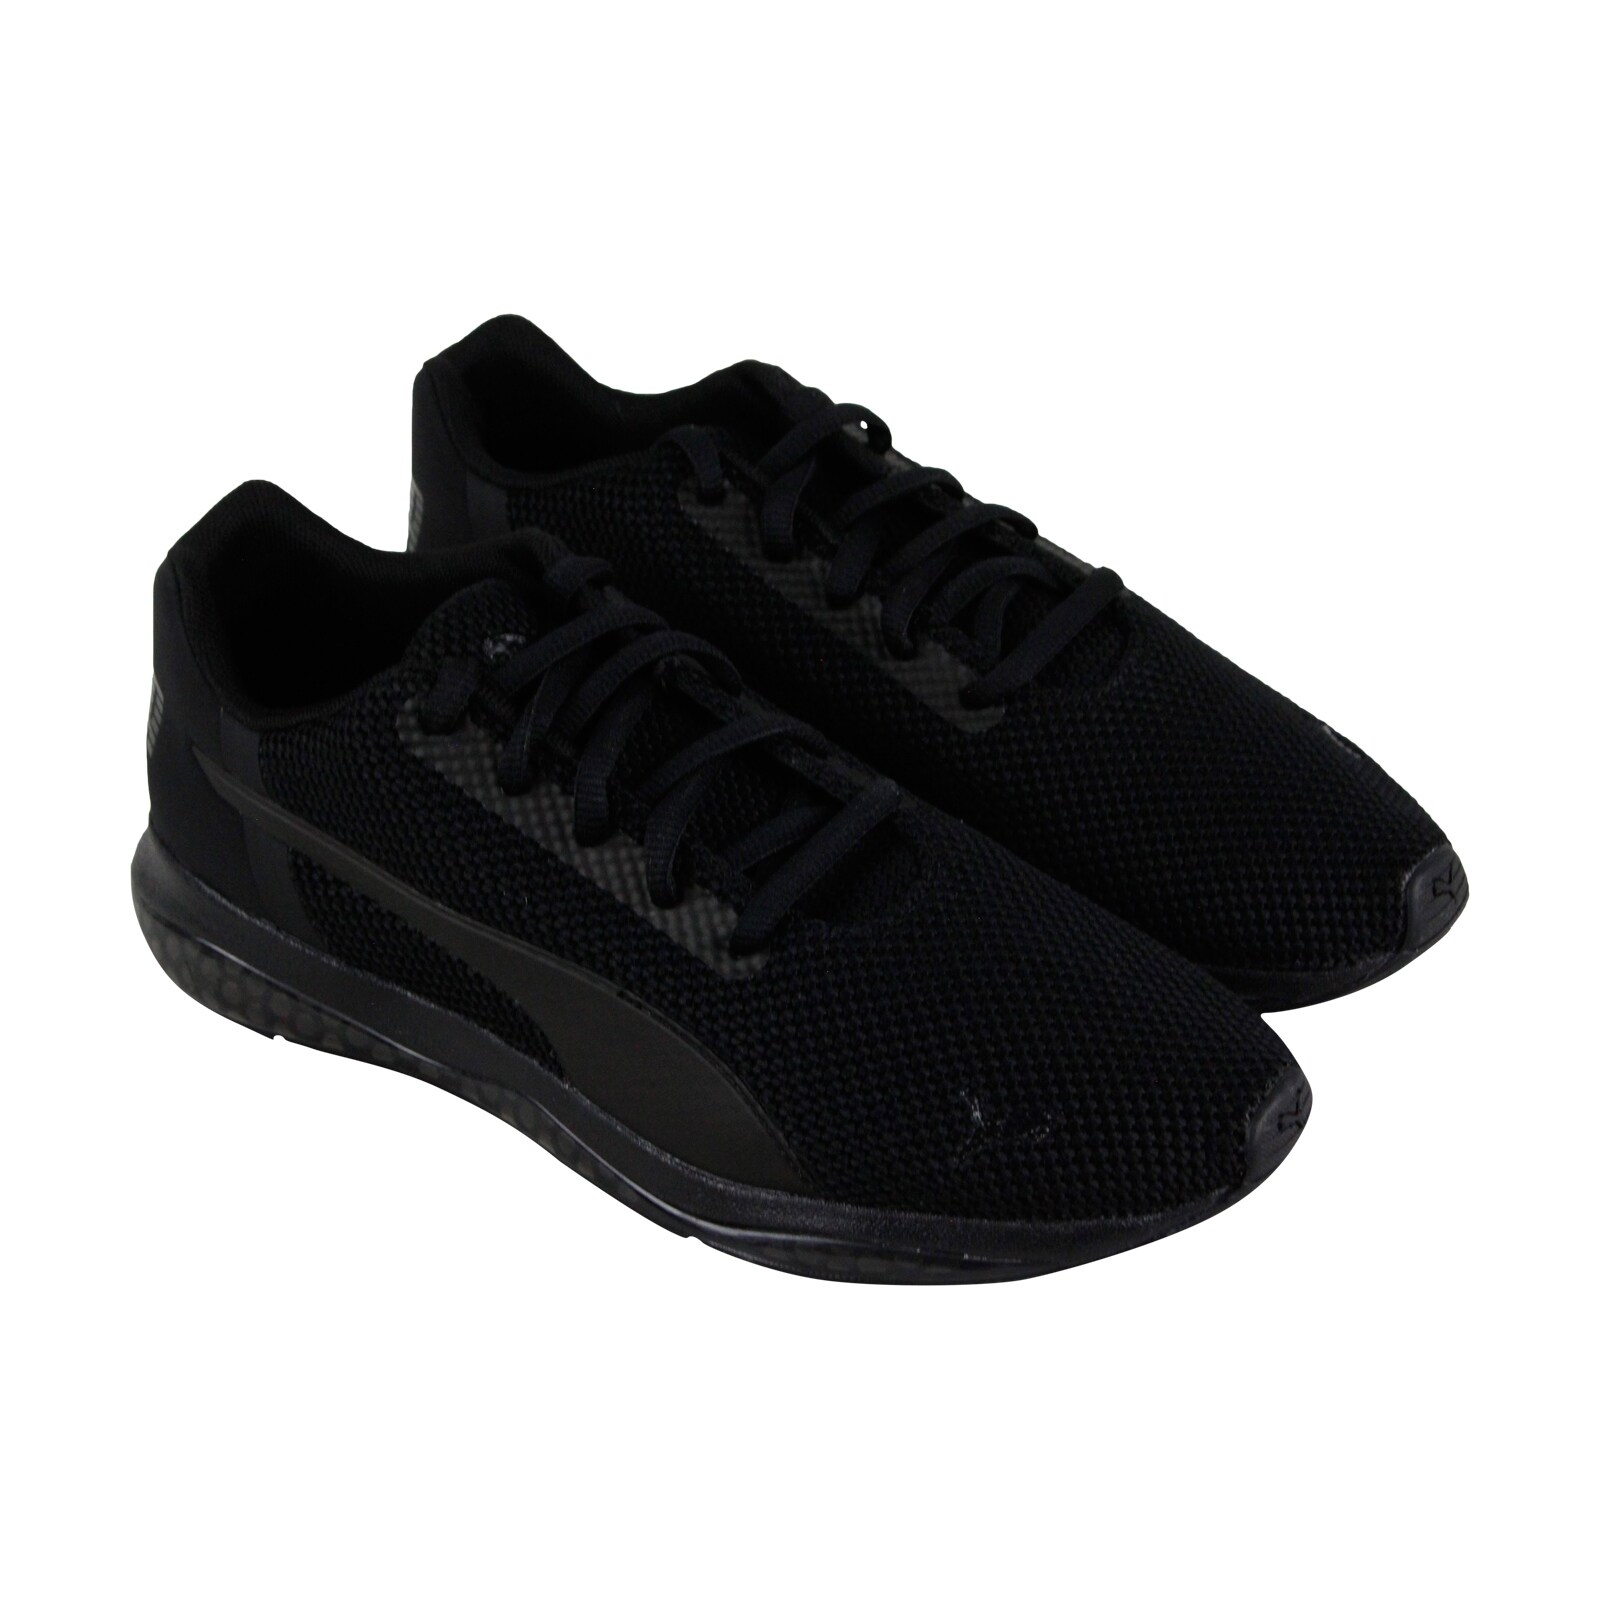 mens black athletic shoes